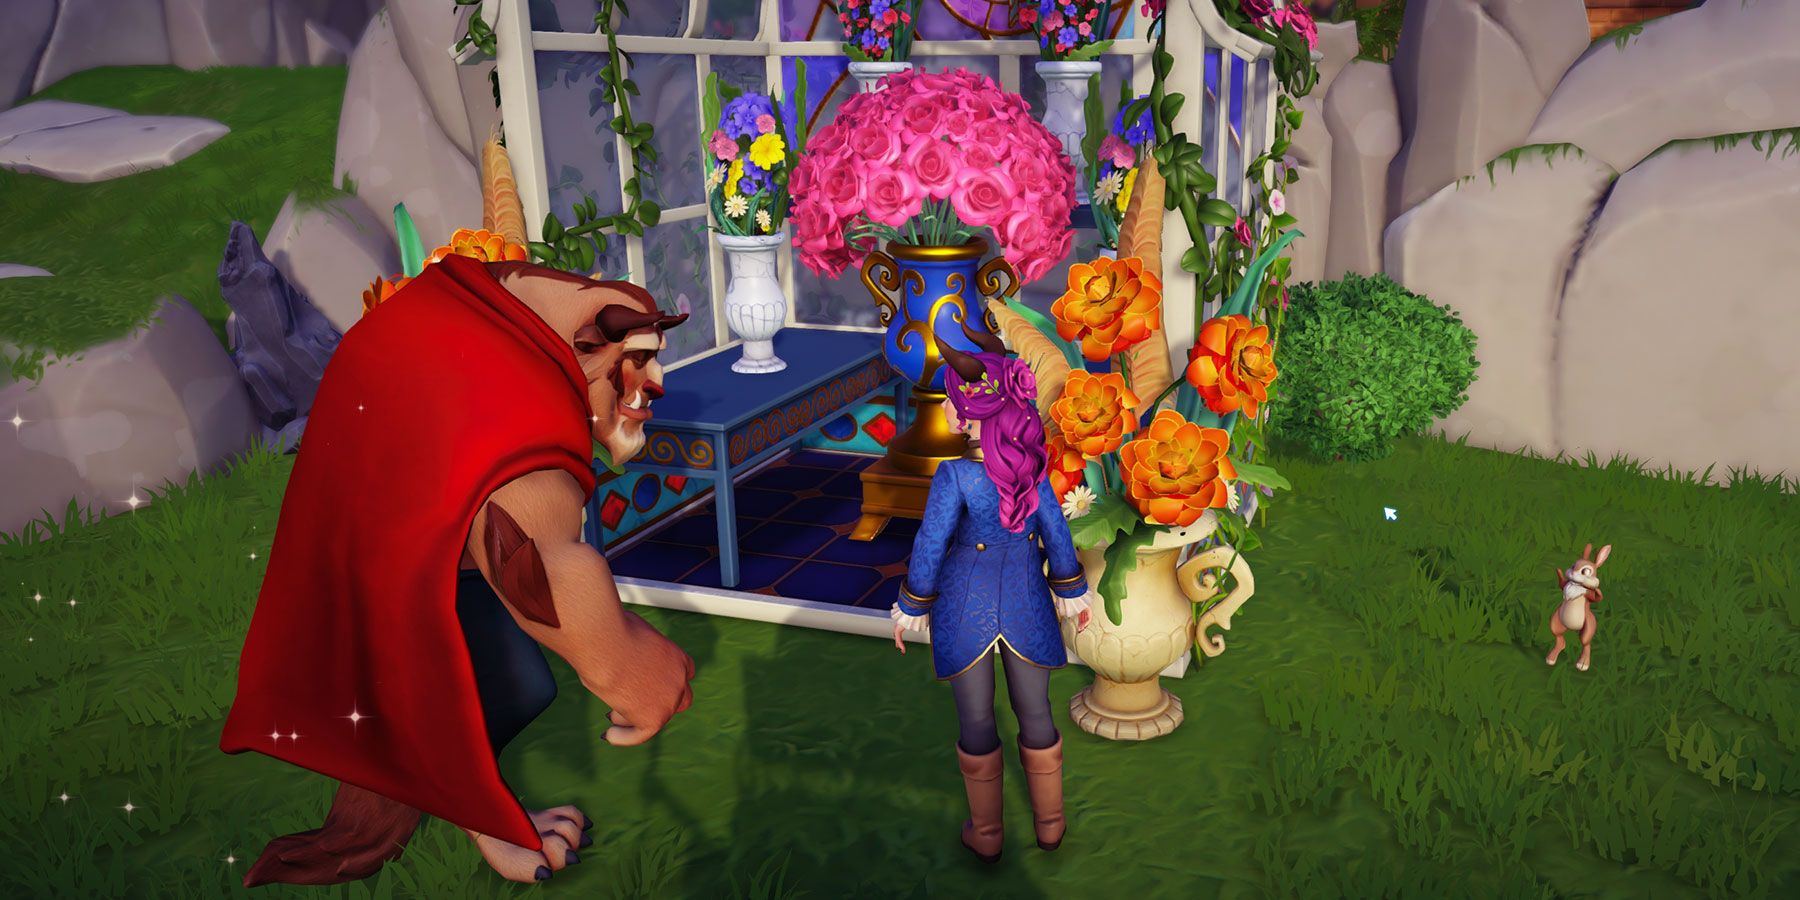 The Beast's Greenhouse unlocked in Disney Dreamlight Valley.